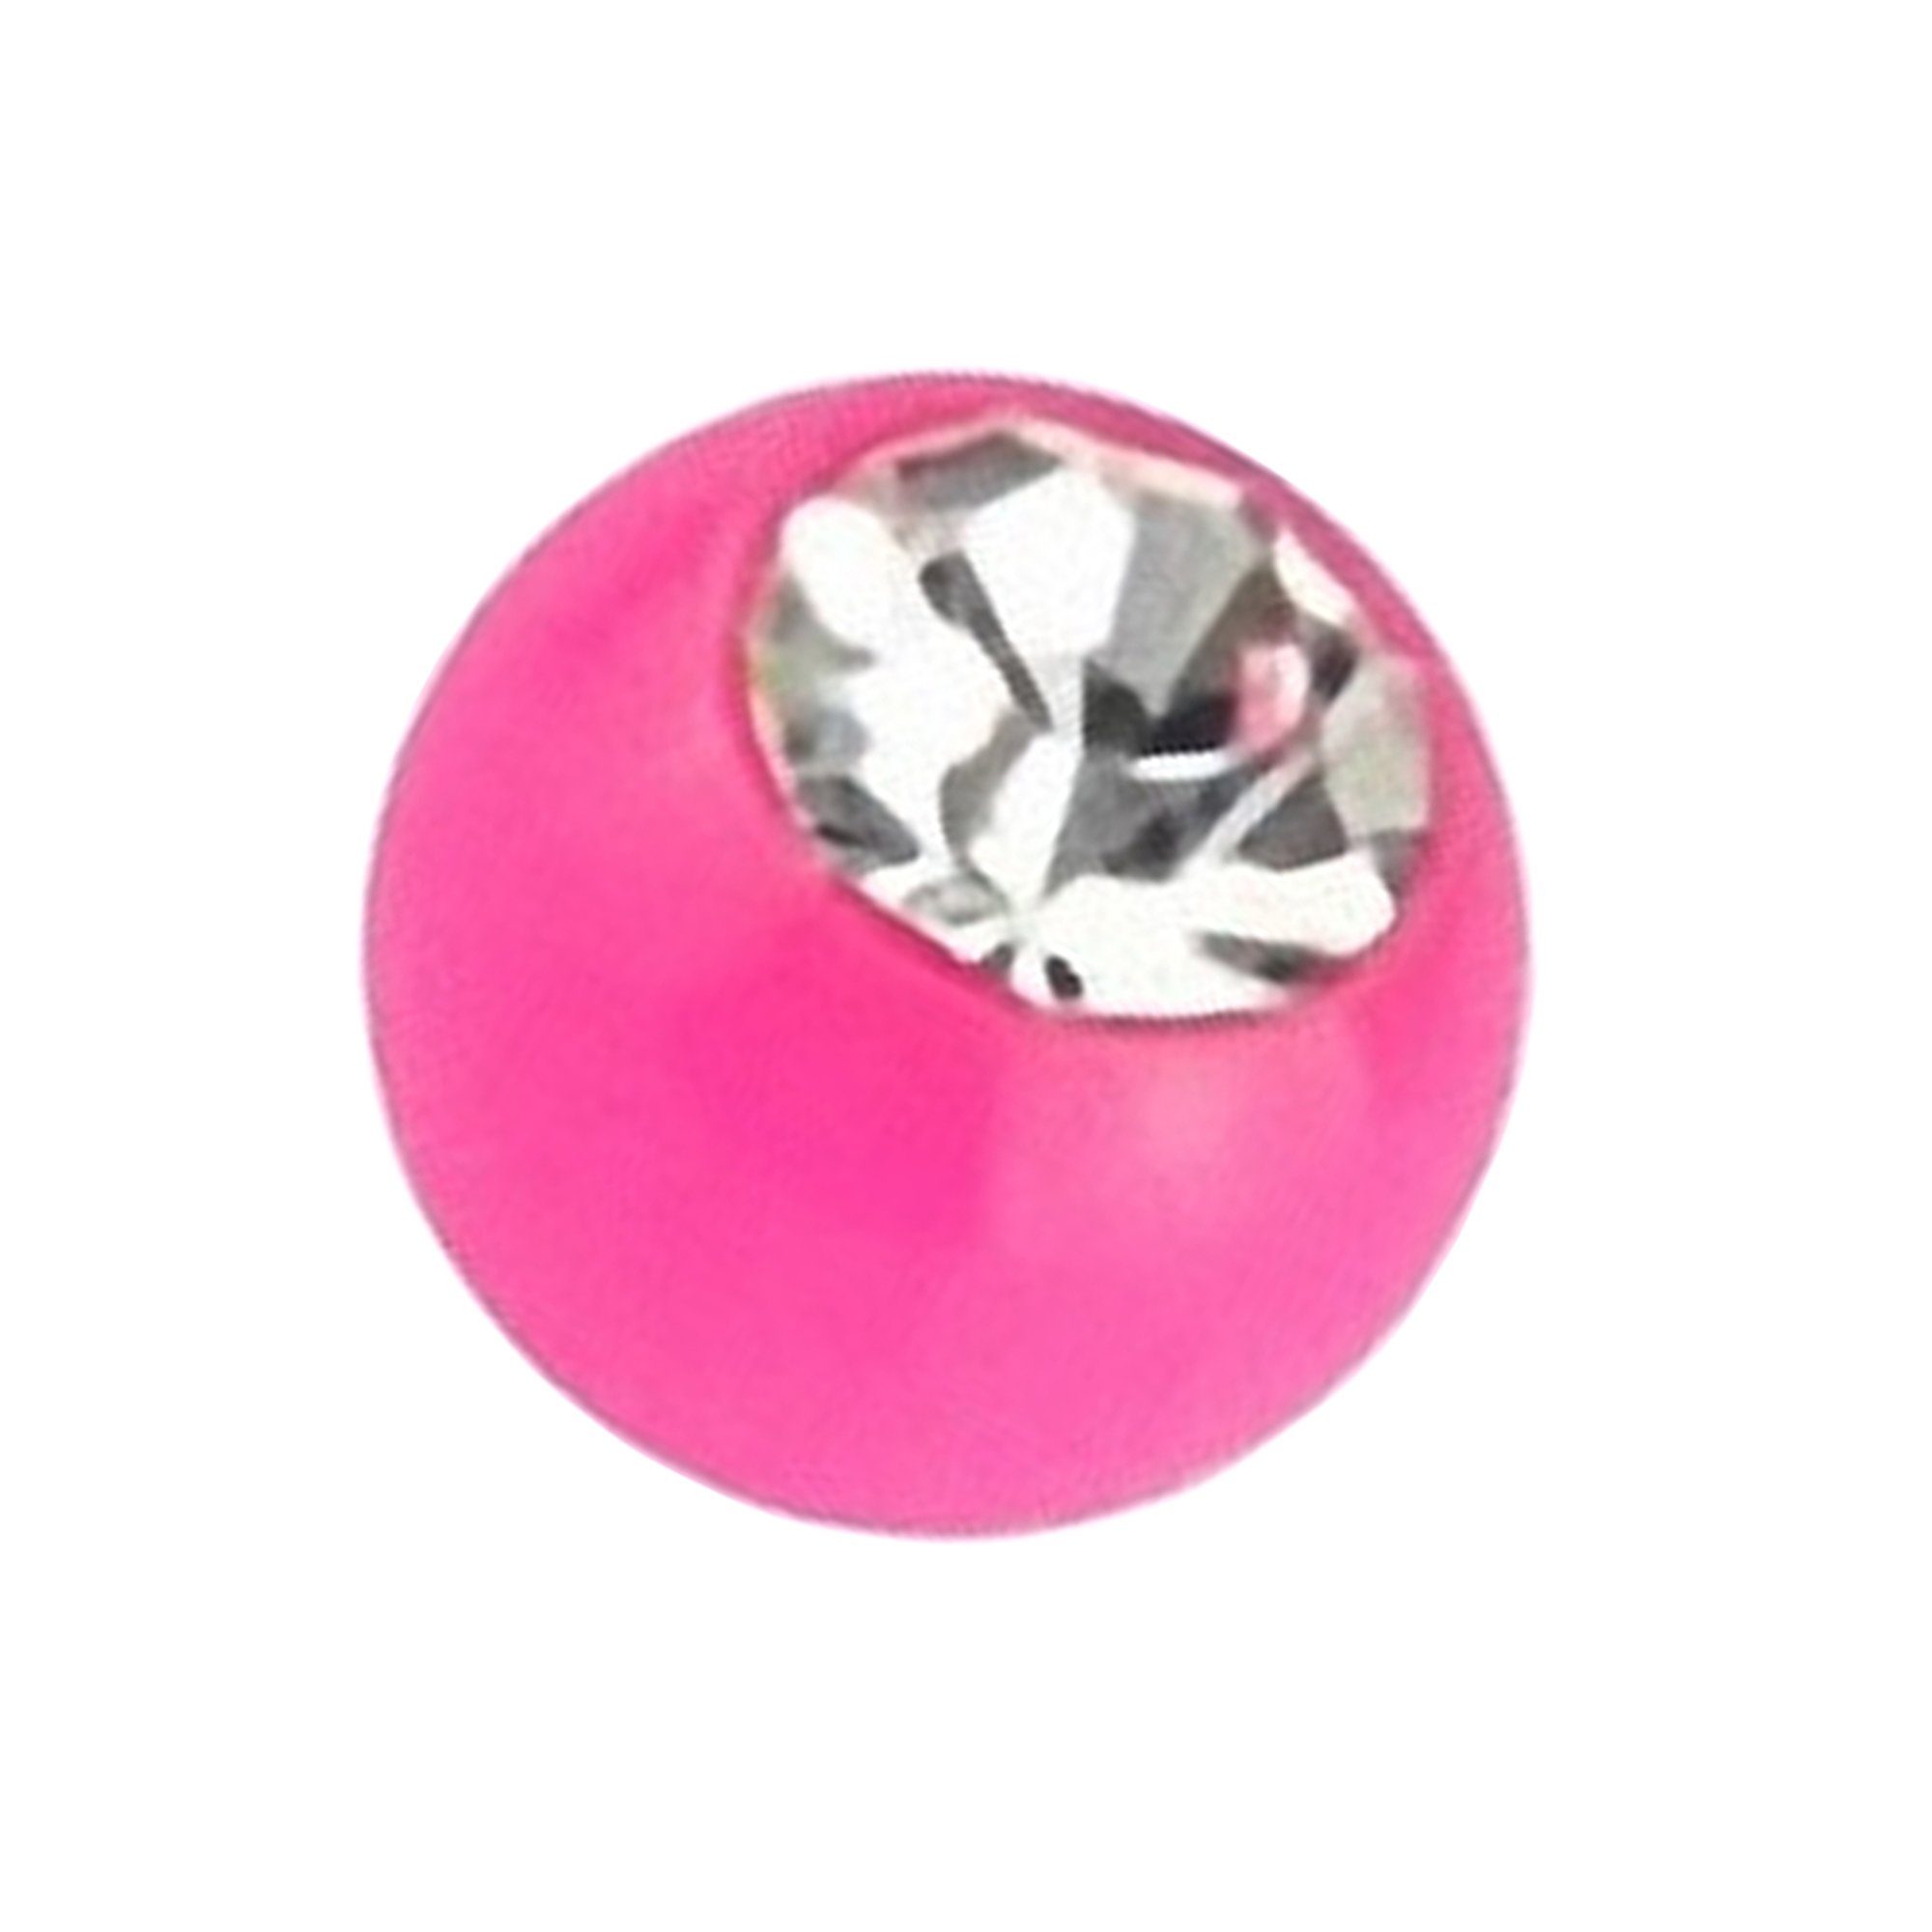 Ersatzteile in Innengewinde Piercing Verschluss Taffstyle UV Pink Kugel Piercing-Set Verschlusskugel Schraubkugel verschiedenen, Ersatz Kristall